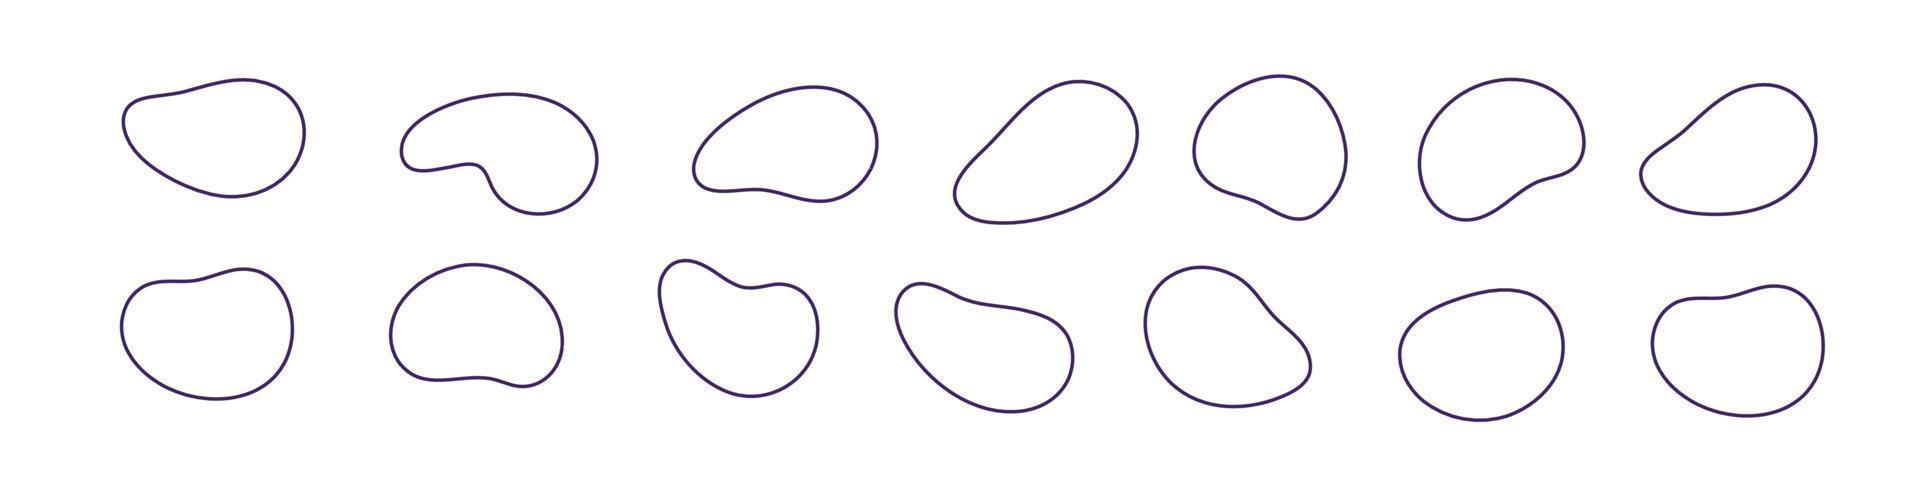 Organic line shapes set. Abstract fluid melt, dynamic blob wave pattern. Flat vector illustration